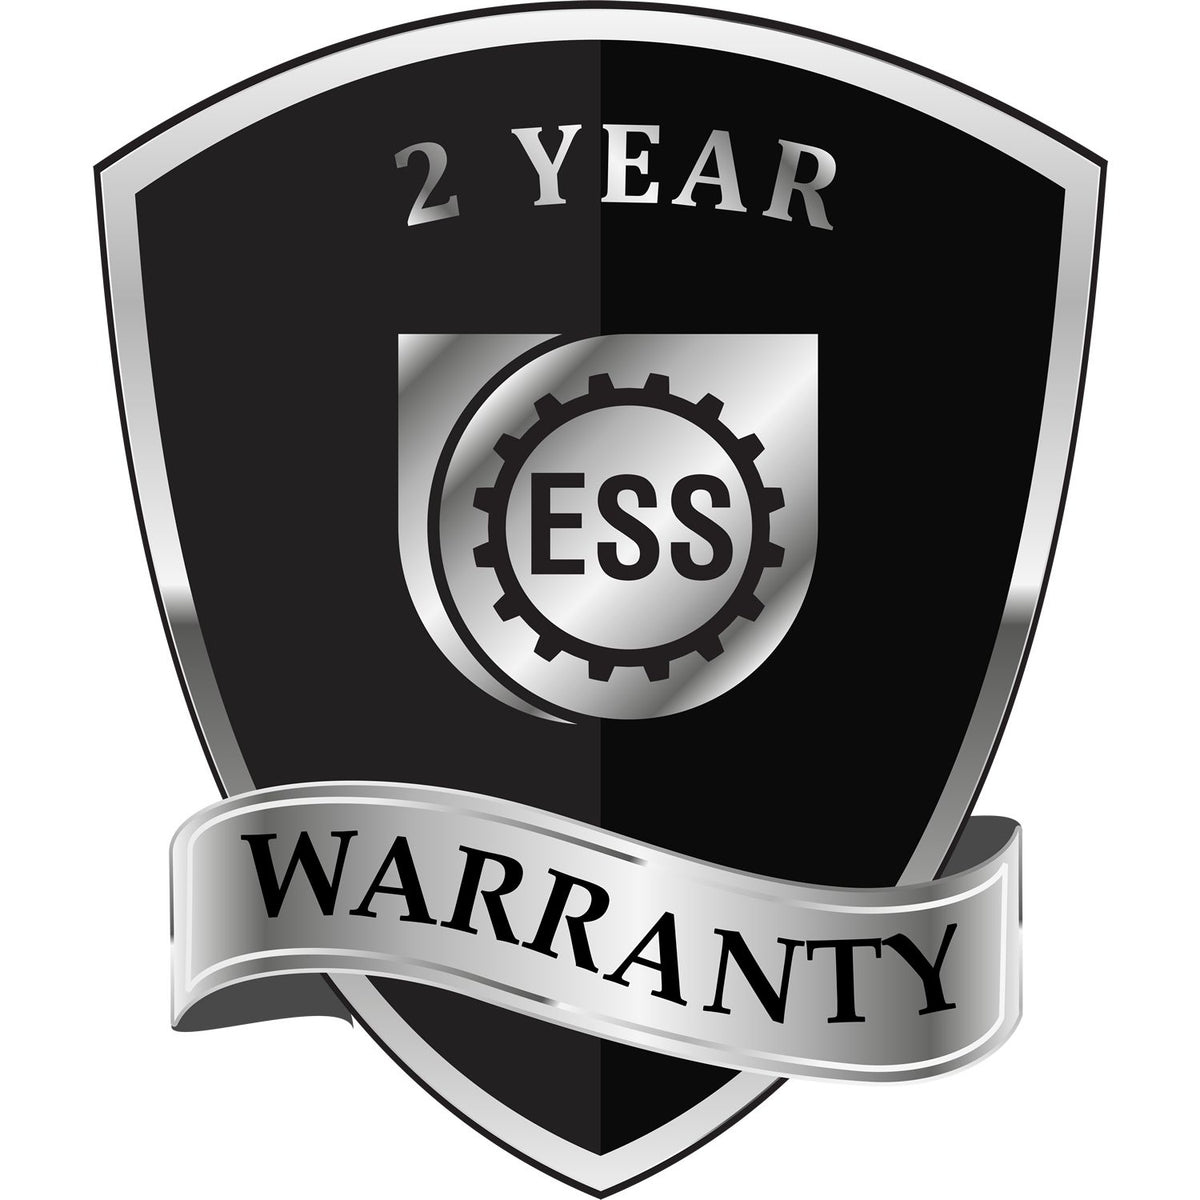 A badge or emblem showing a warranty icon for the Massachusetts Desk Surveyor Seal Embosser